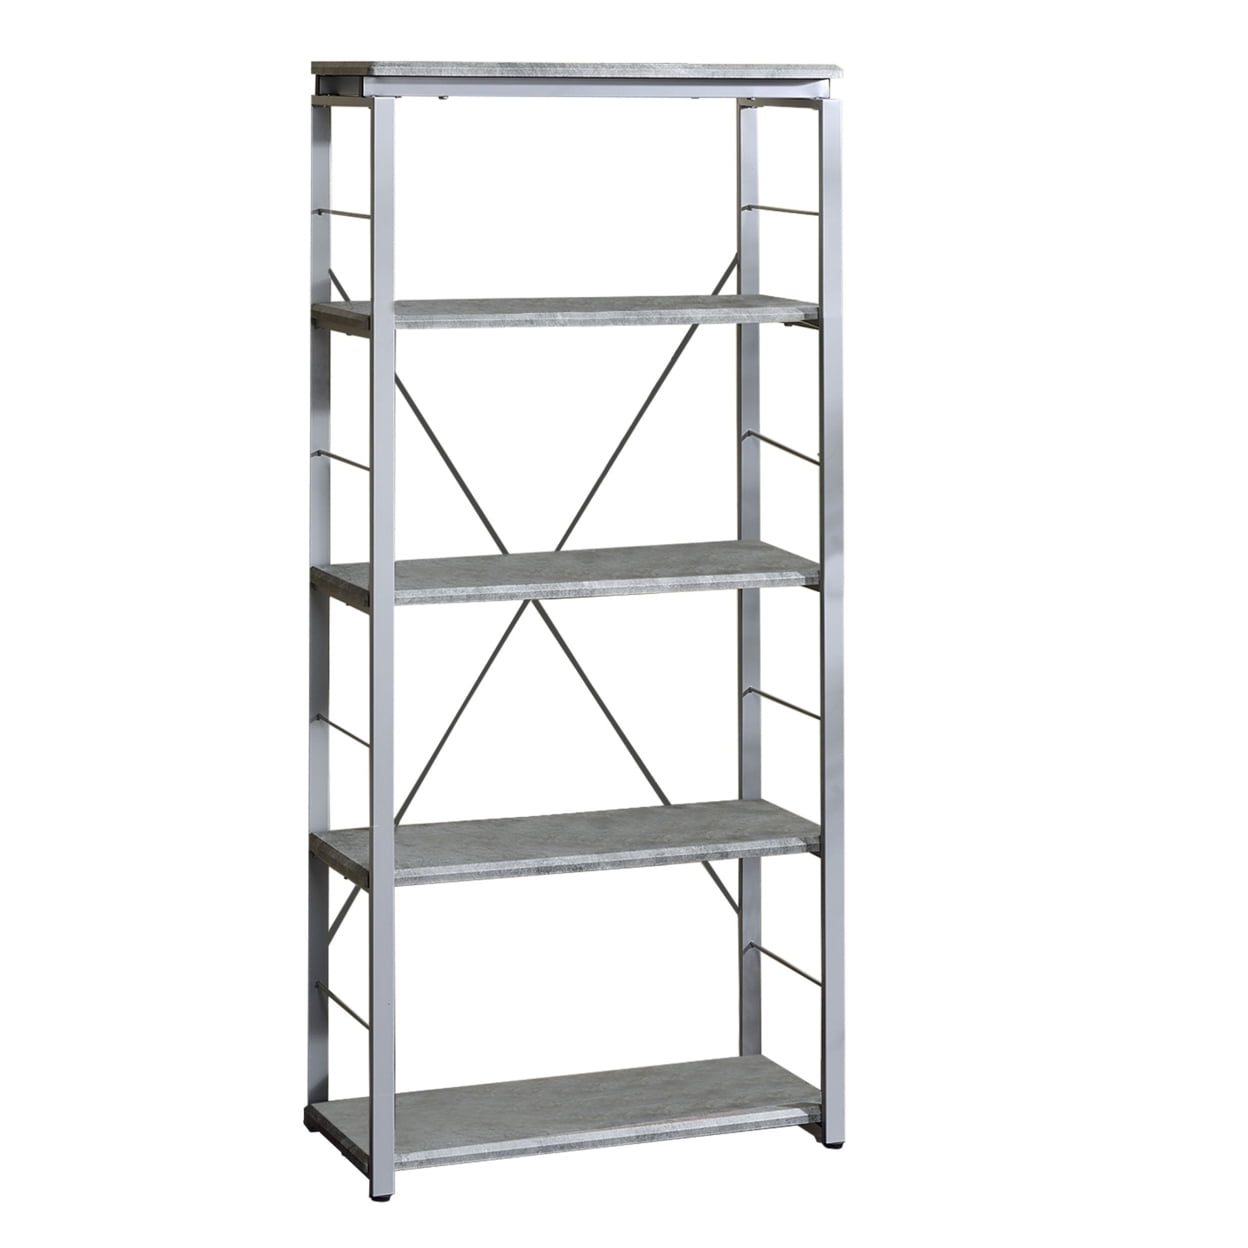 Bm209626 Industrial Bookshelf With 4 Shelves & Open Metal Frame - Silver & Gray - 54 X 9 X 24 In.